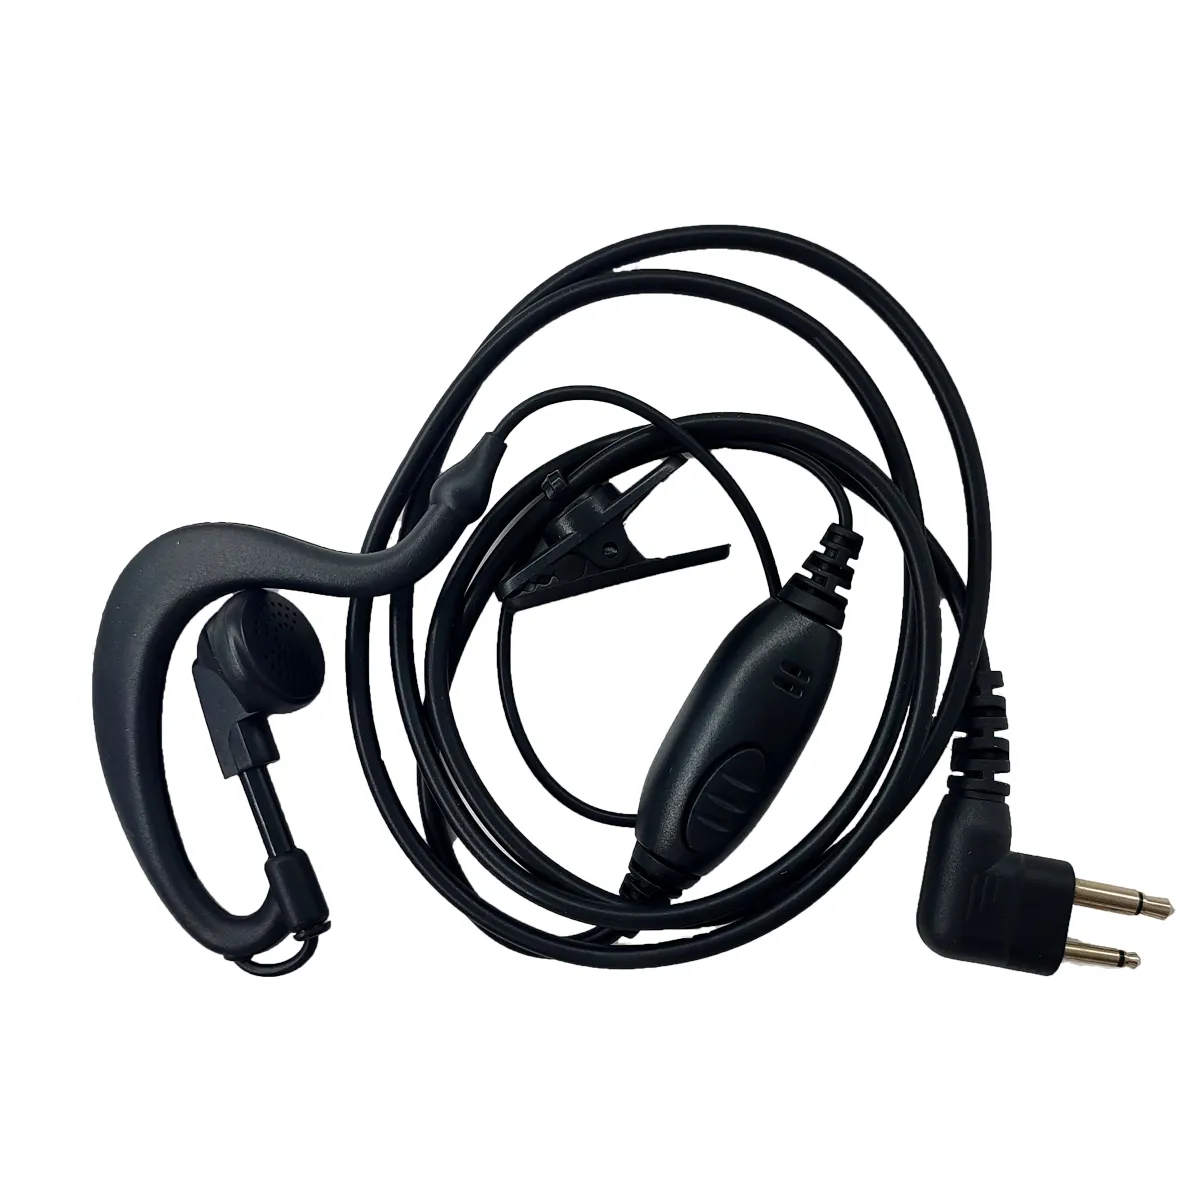 High quality clear ptt vox light walkie talkie earpiece headset P102-PM01-G3